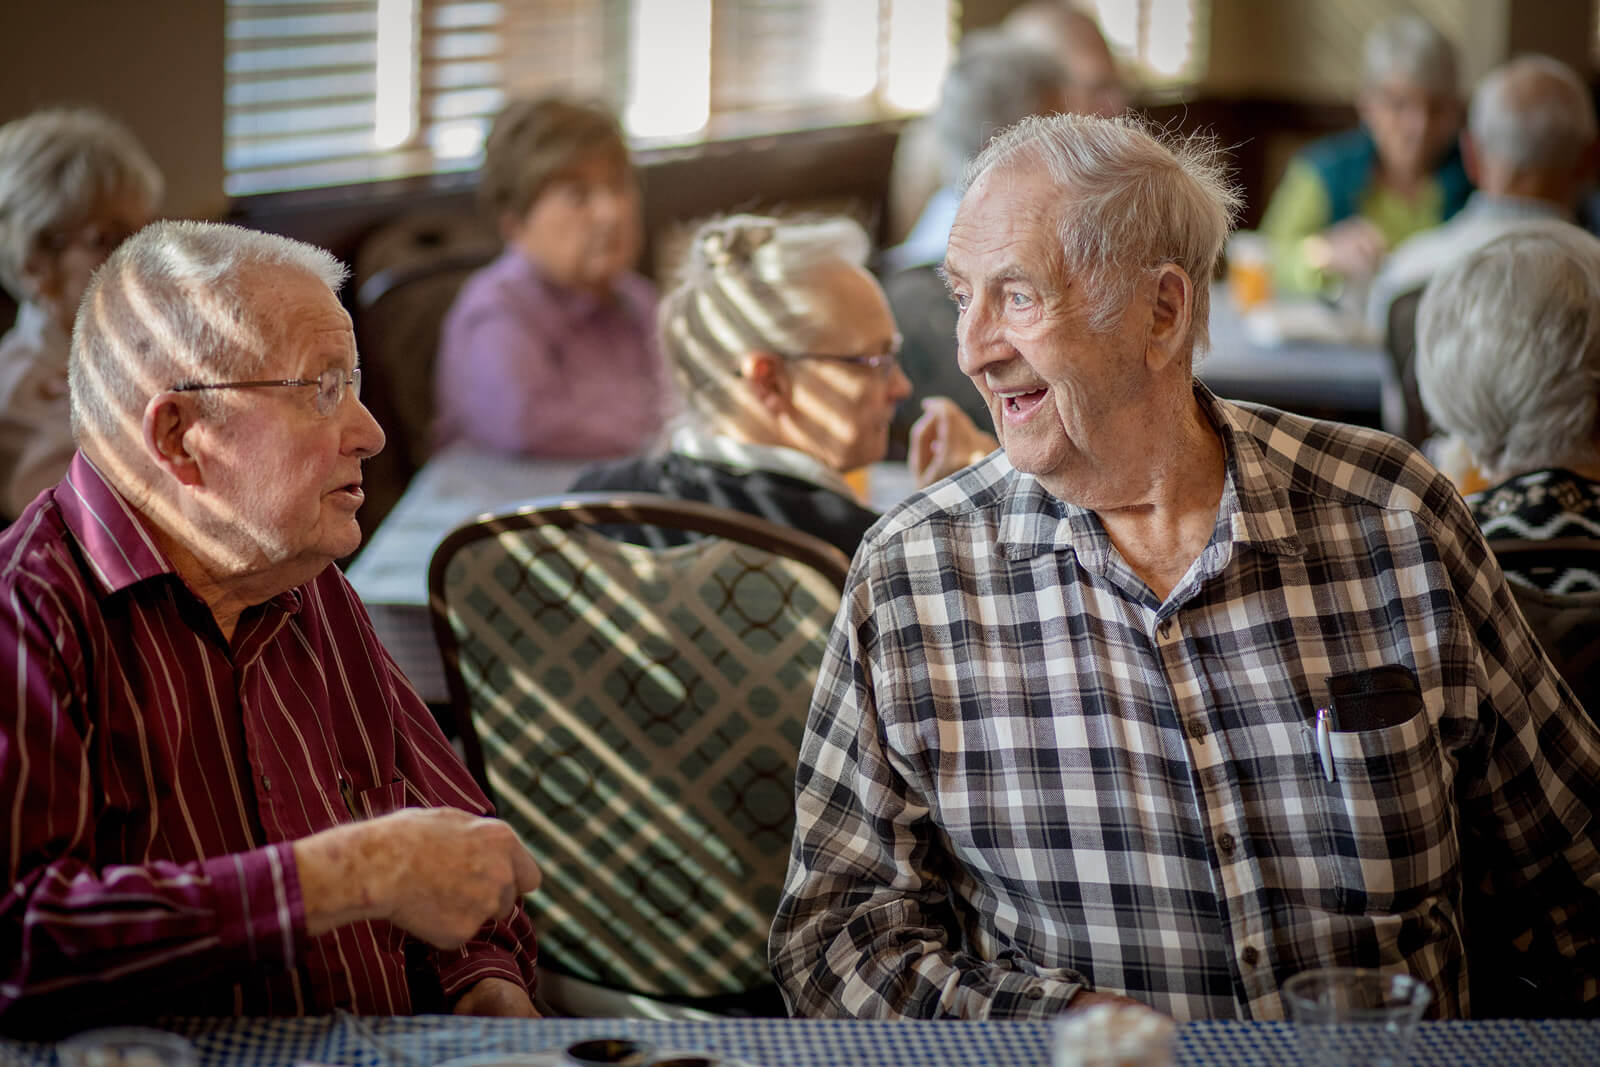 stages of dementia, older gentlemen in memory care community